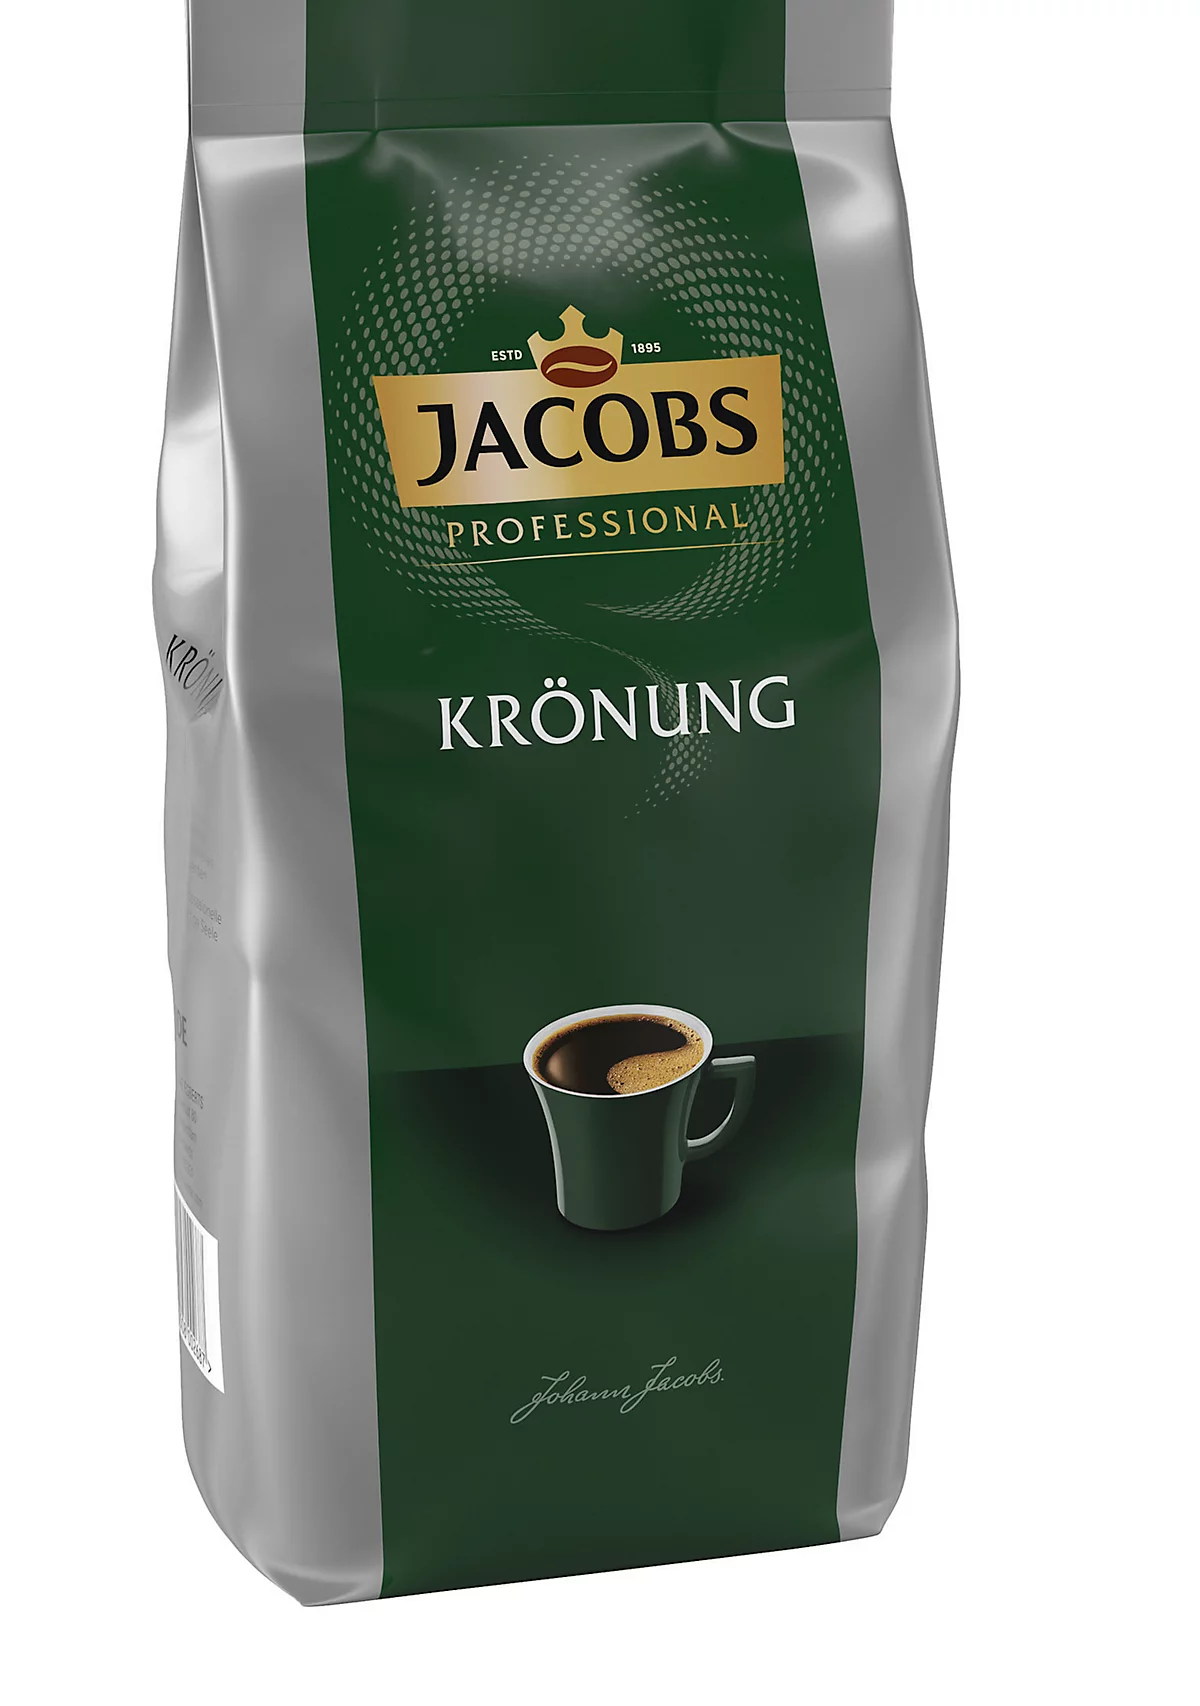 Kaffee Jacobs Krönung, Gastronomie-Qualität, gemahlen, 1 kg